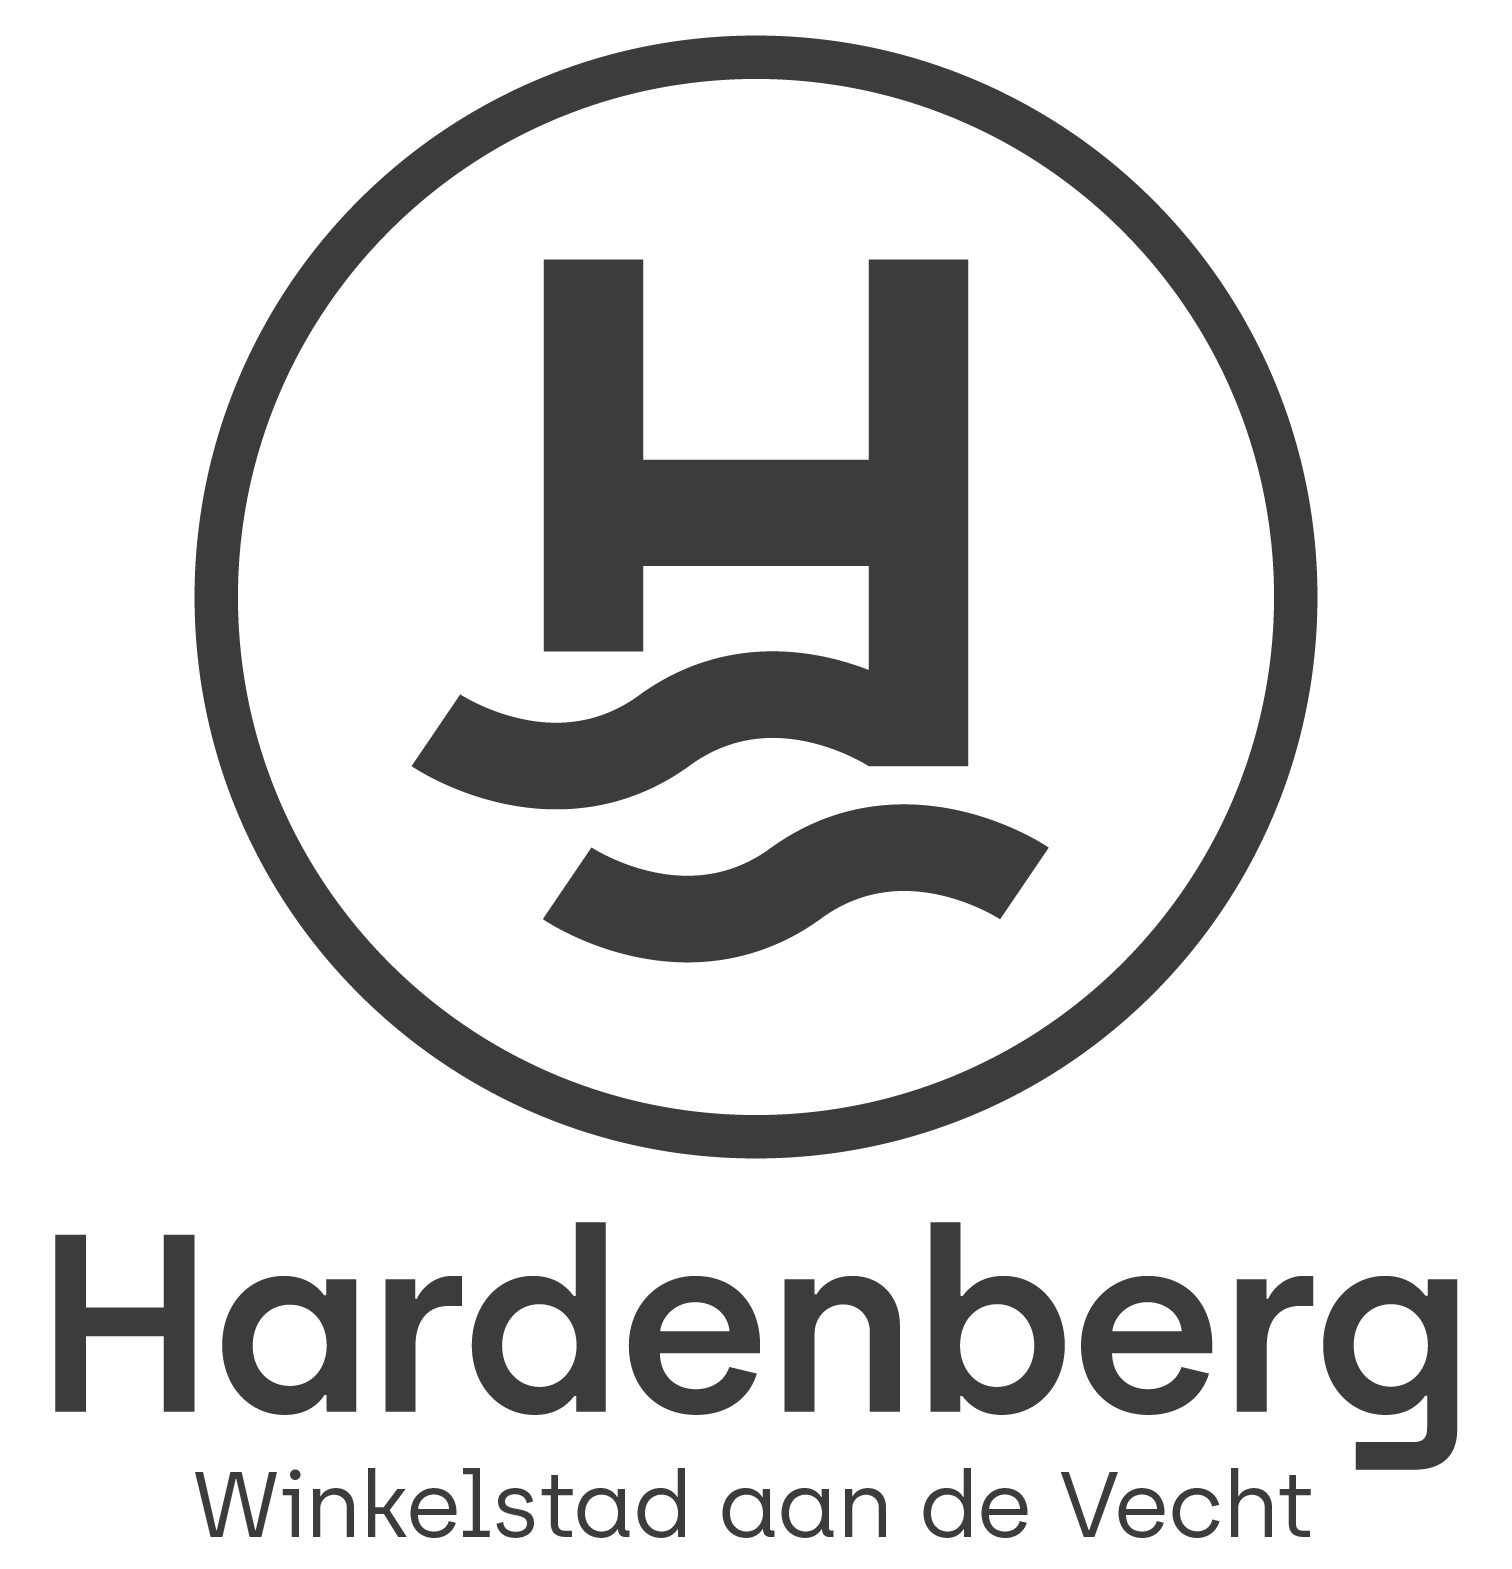 Nu ik je zie - Winkelstad Hardenberg